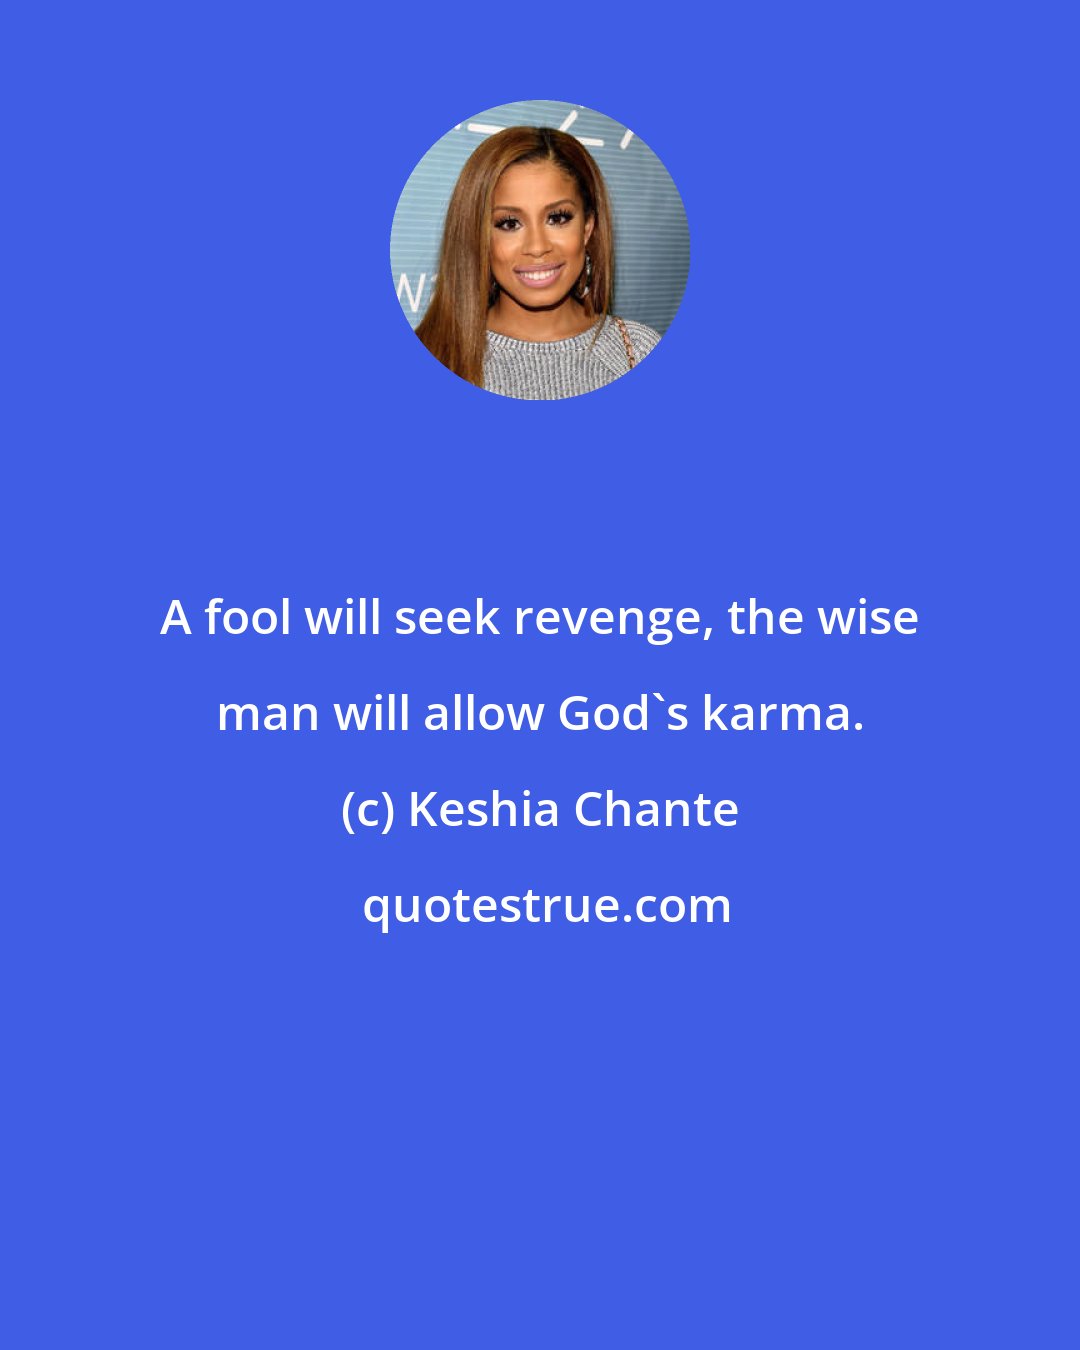 Keshia Chante: A fool will seek revenge, the wise man will allow God's karma.